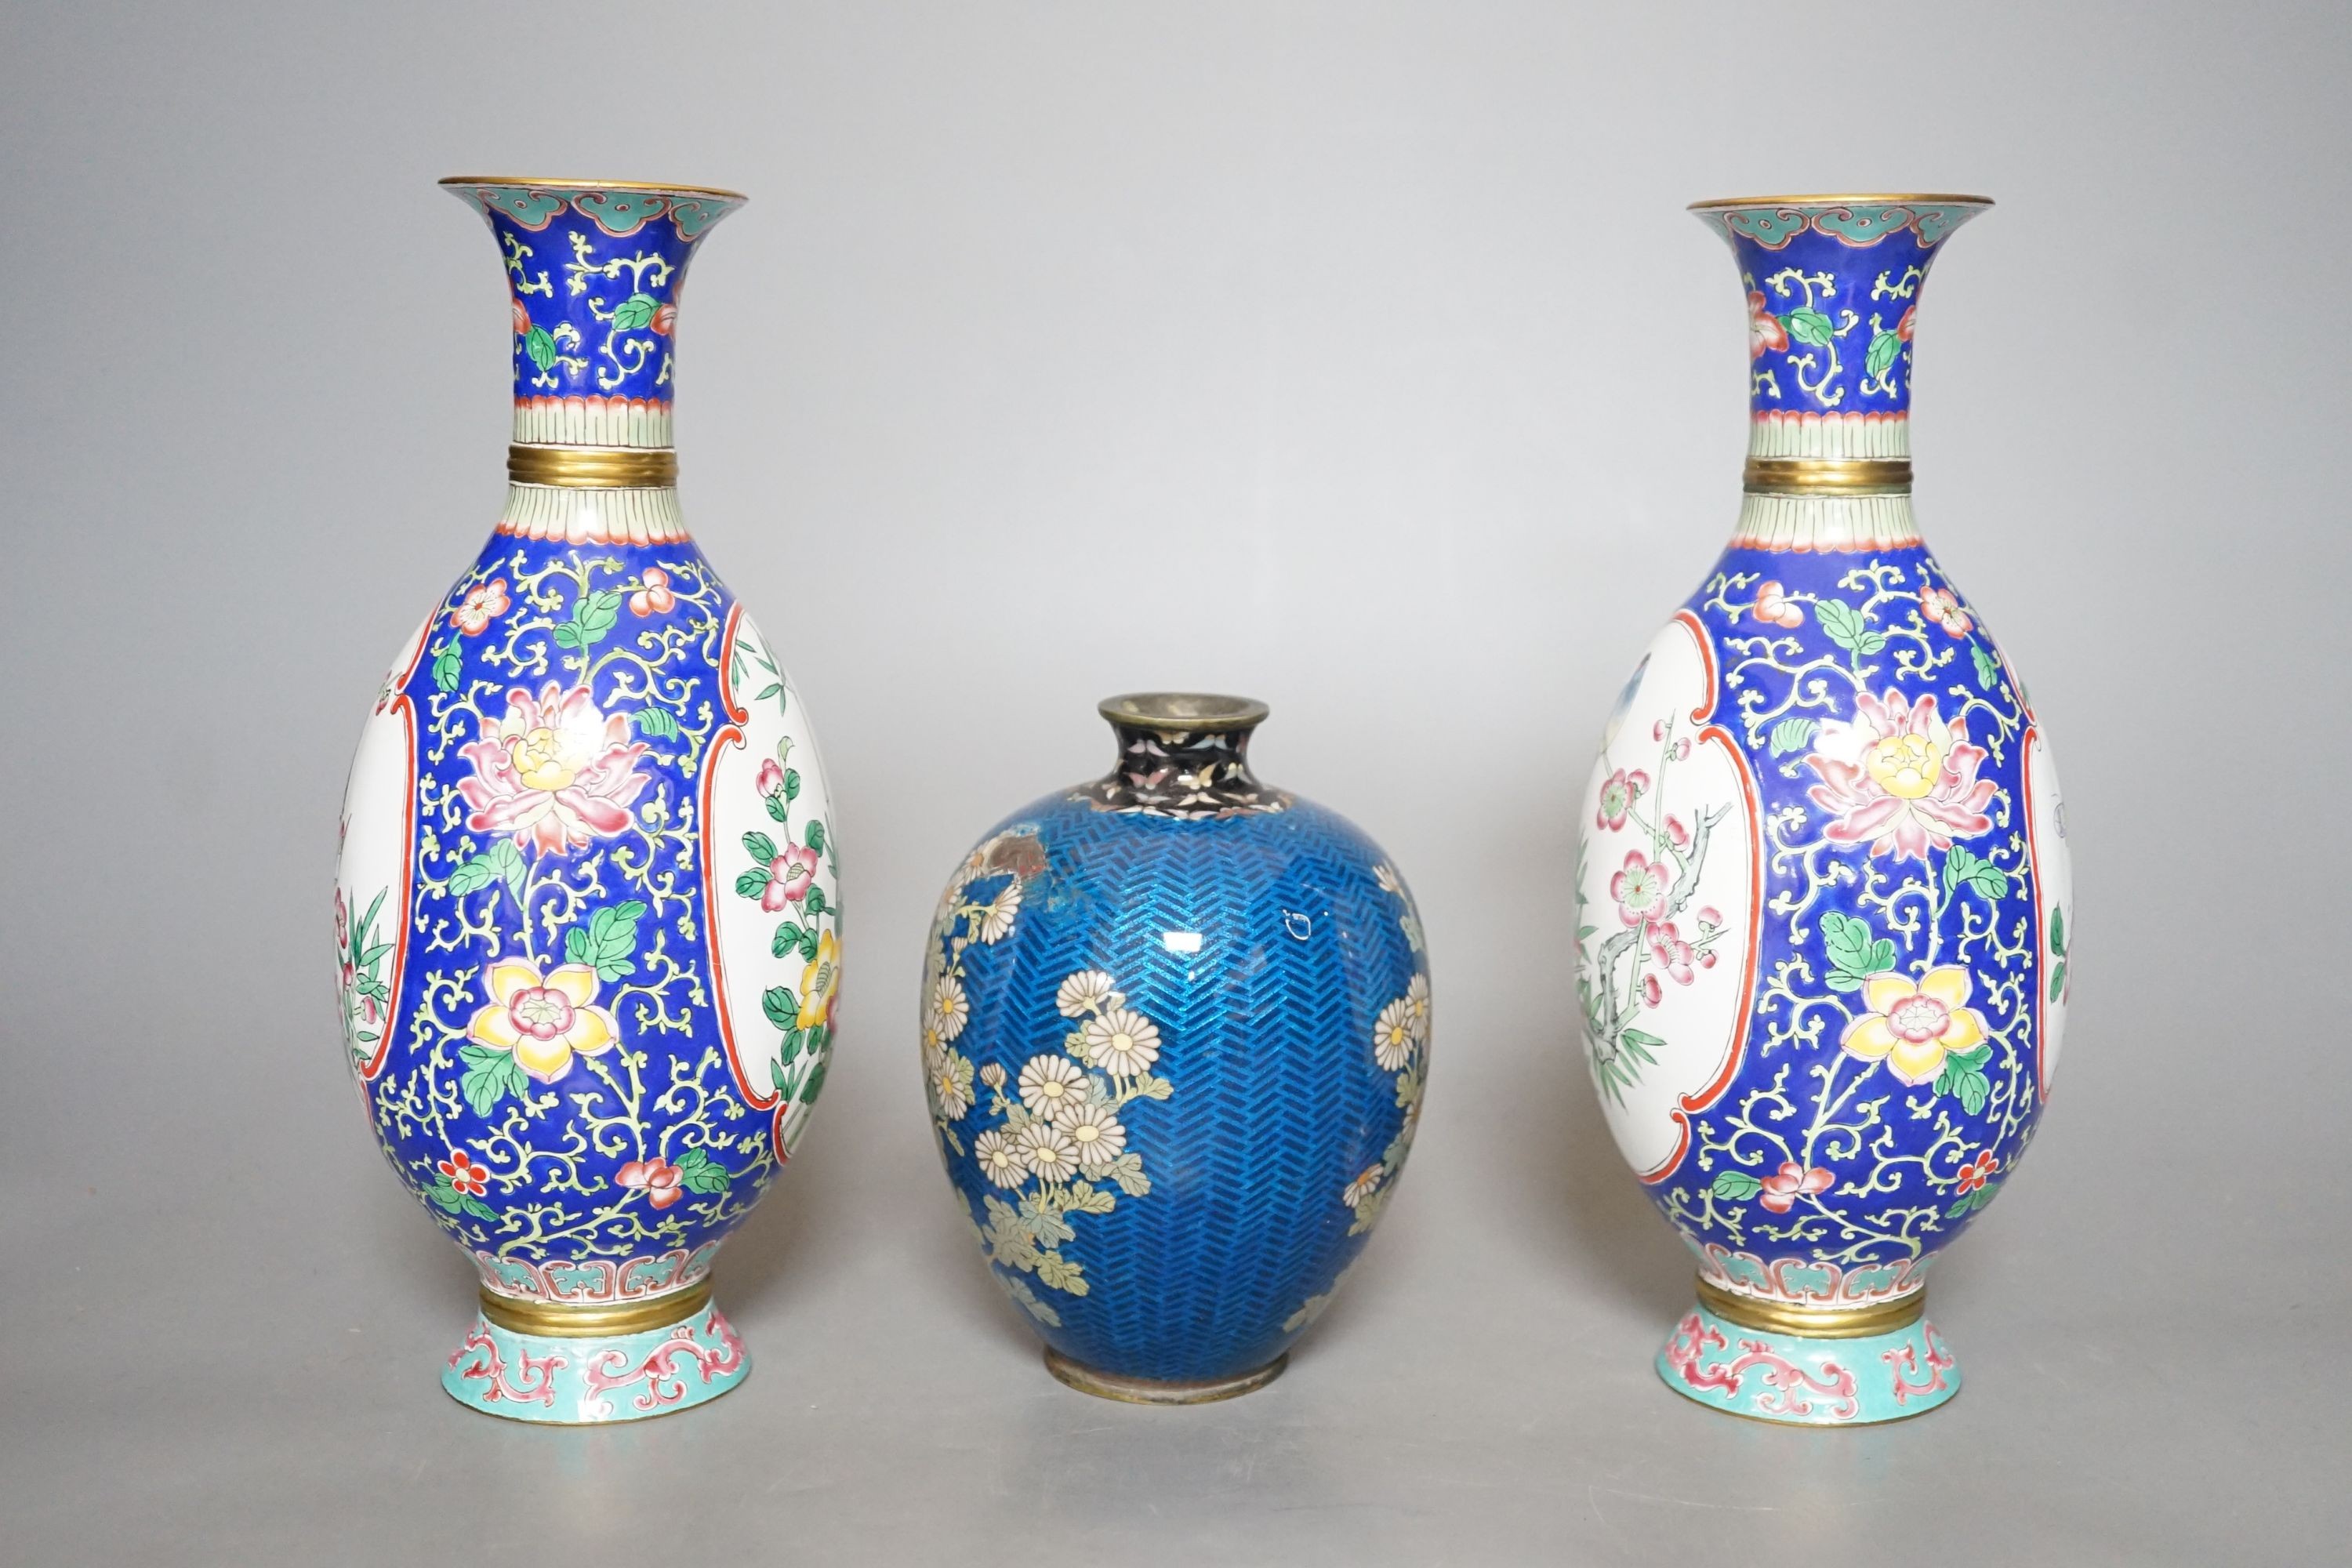 A Japanese floral cloisonné enamel vase, 13cm tall, together with two Canton enamel vases